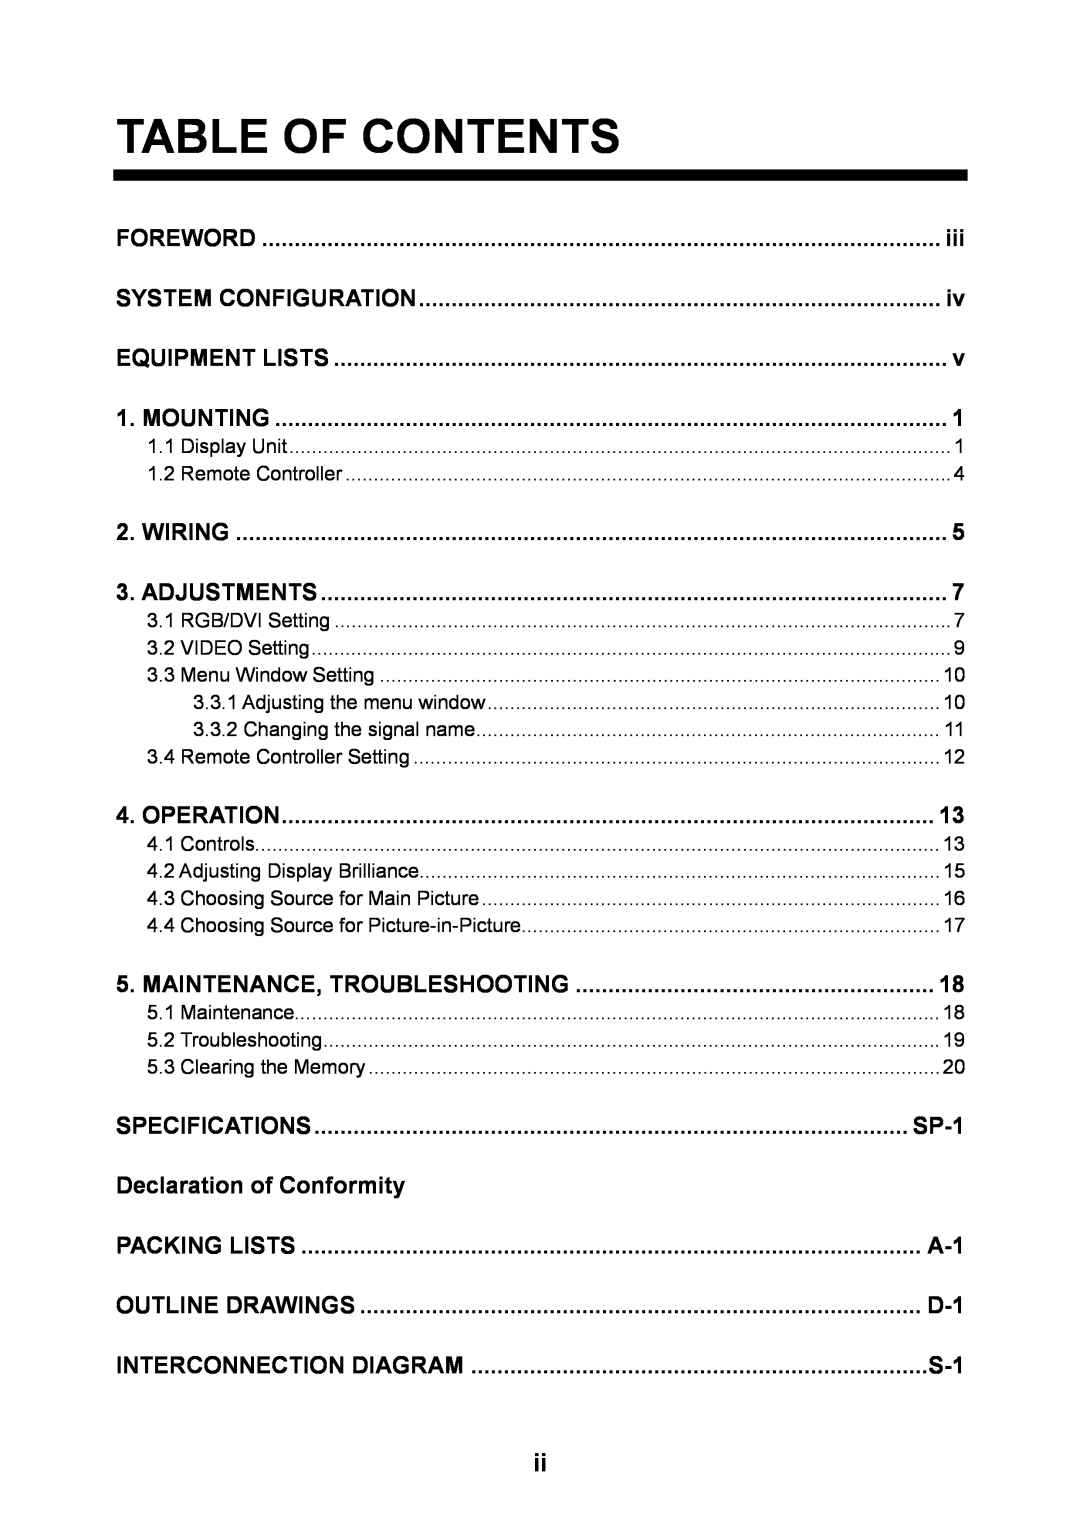 Furuno MU-170C manual Table Of Contents, SP-1, Declaration of Conformity 